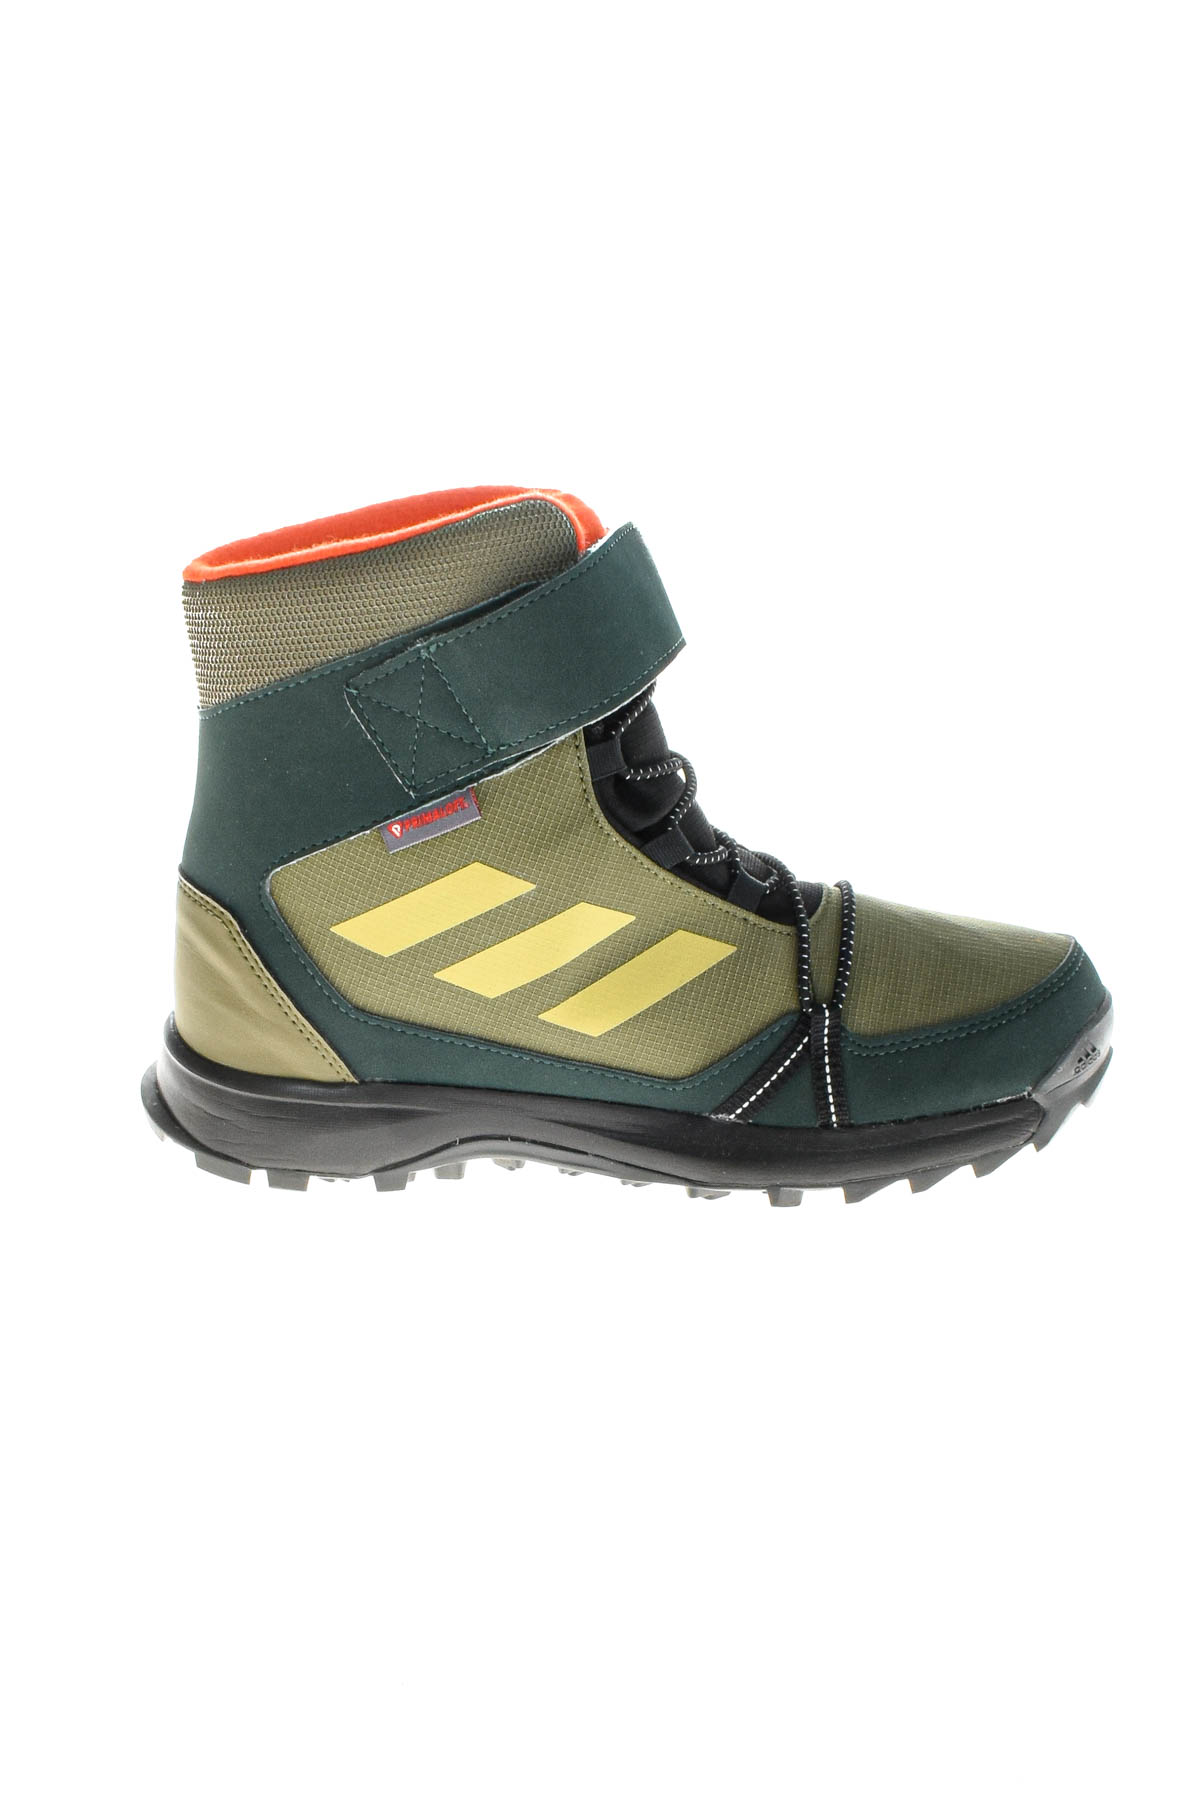 Boy's boots - Adidas - 2